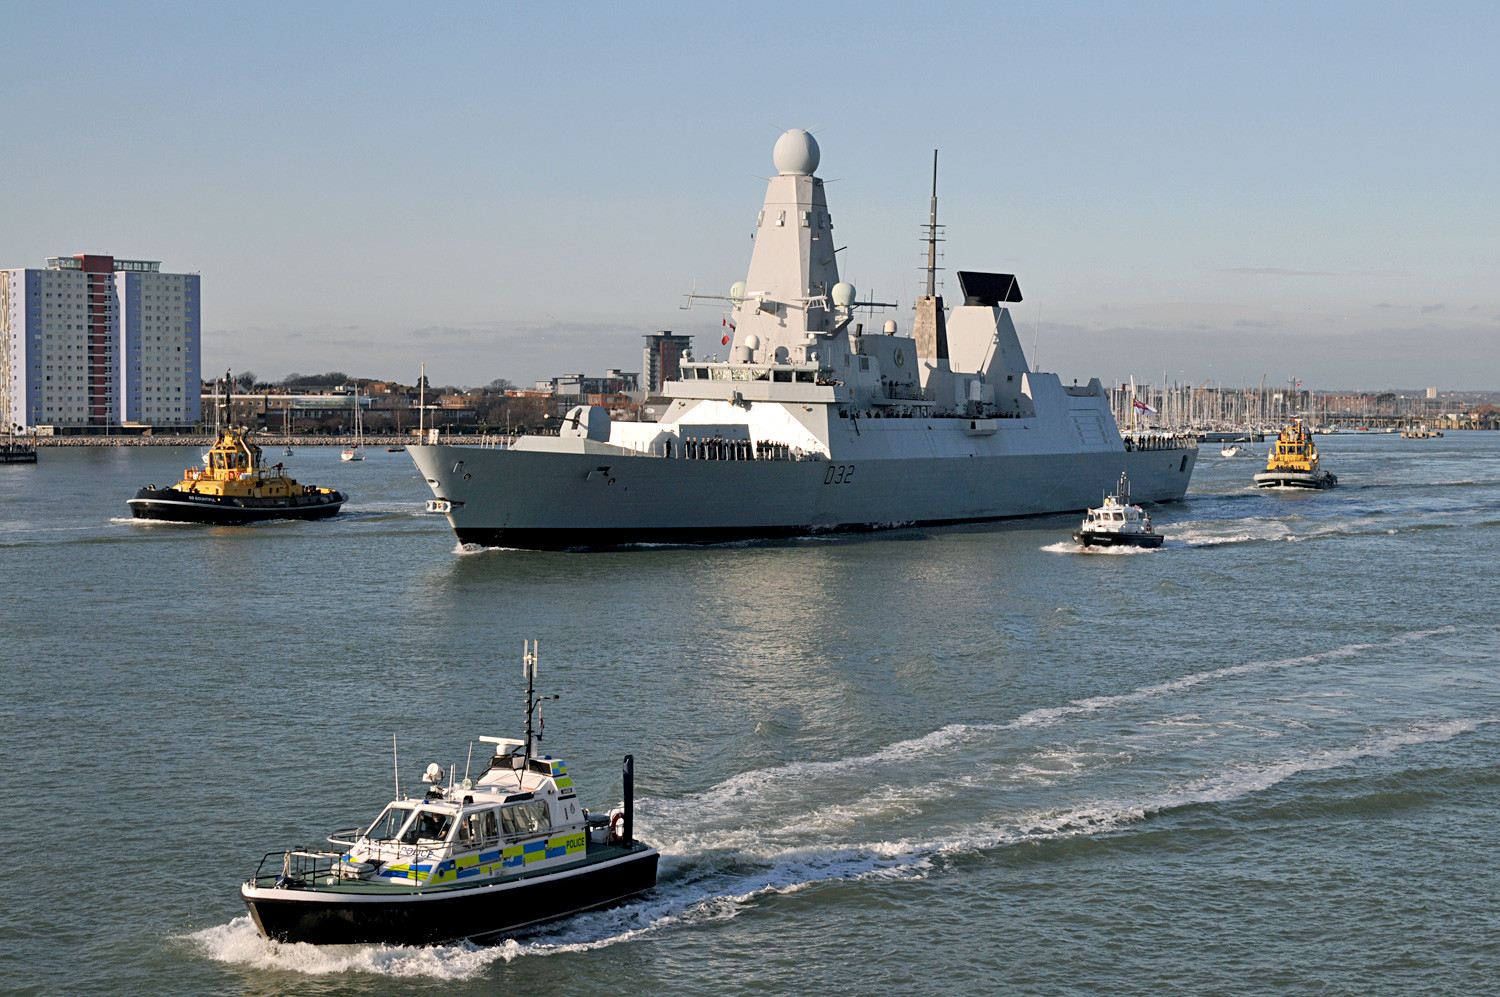 Royal Navy destroyer - HMS Daring leaving Royal Navy Base in Portsmouth